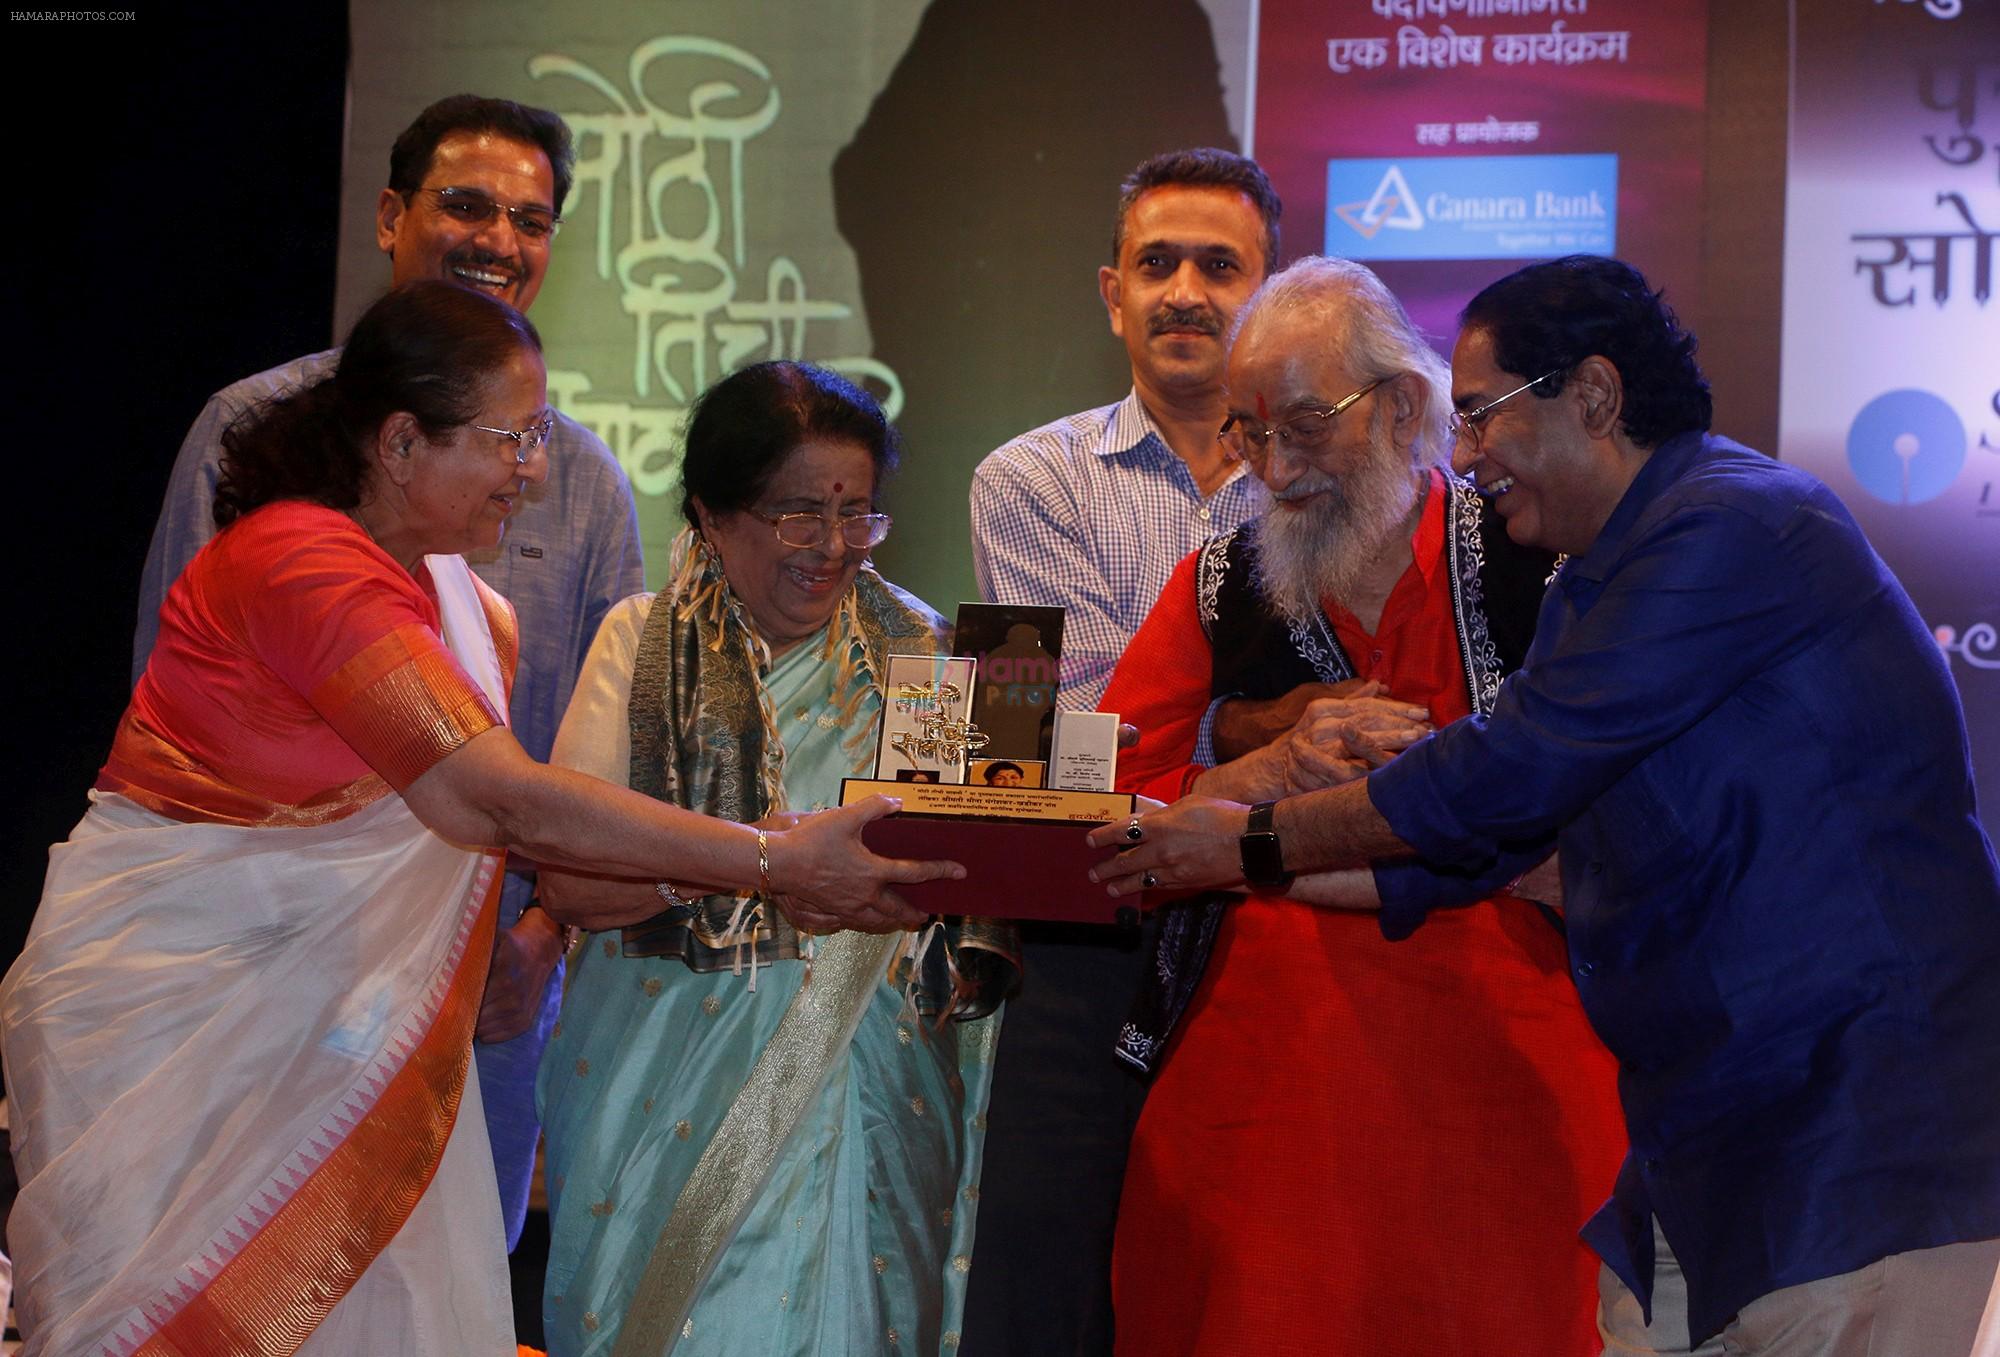 Meena Mangeshkar Khadikar felicitated at the release of Mothi Tichi Savli, a book on Lata Mangeshkar, penned by Meena Mangeshkar-Khadikar